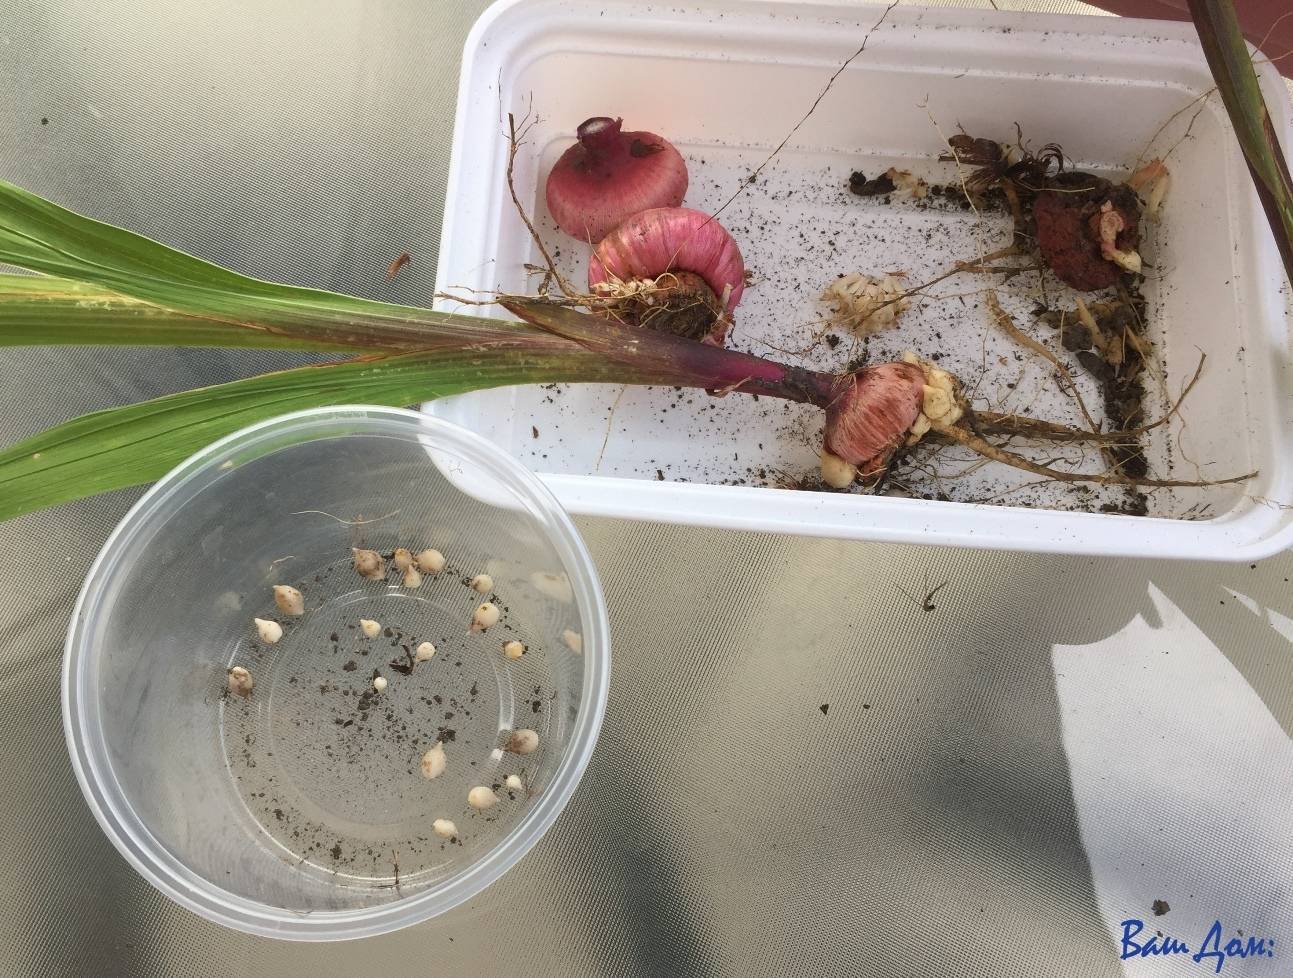 Семена гладиолусов: как выглядят, сбор и выращивание